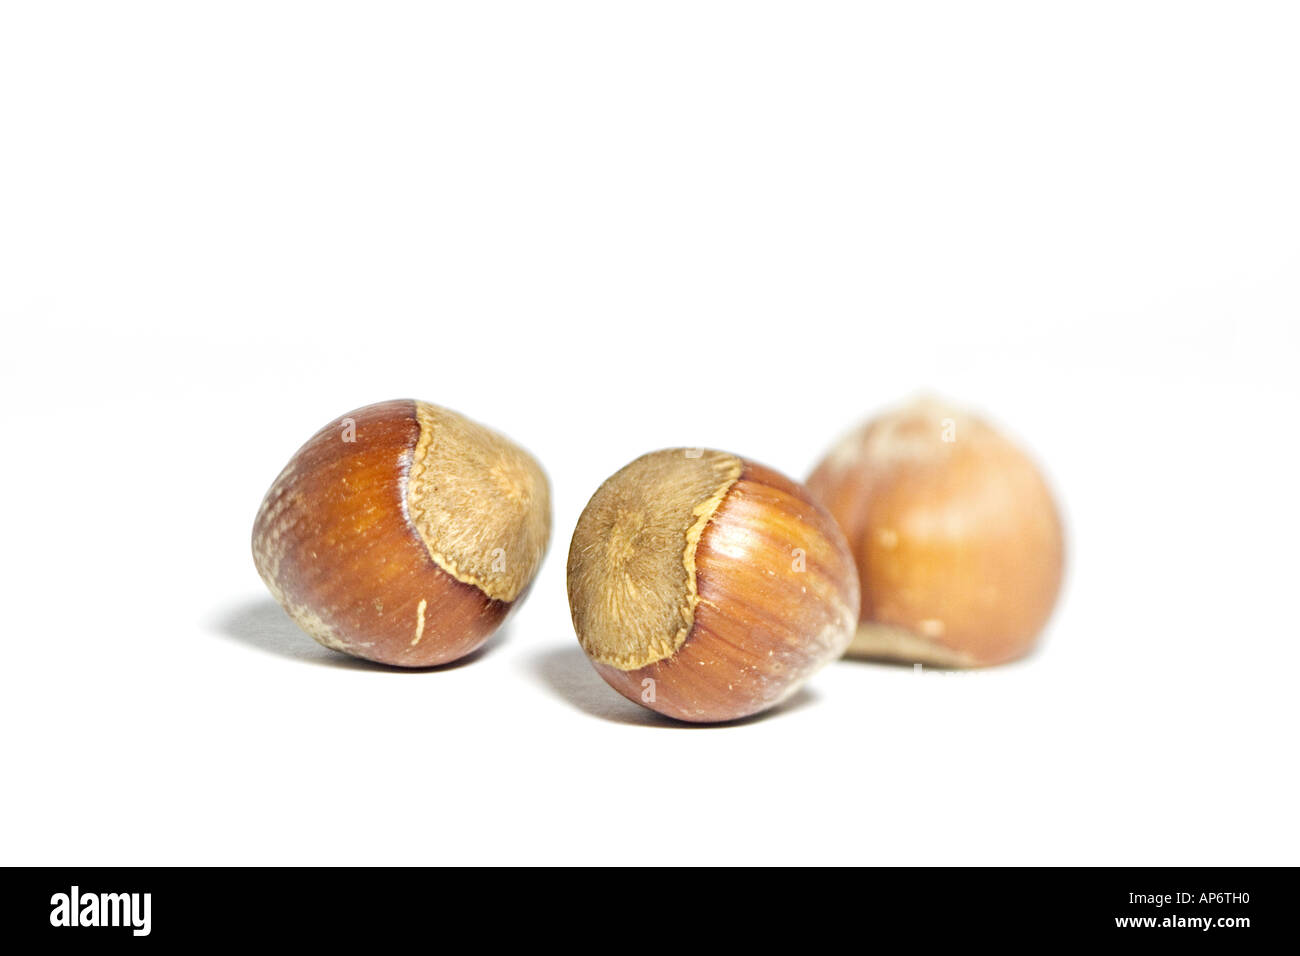 macadamia nuts on a white background Stock Photo